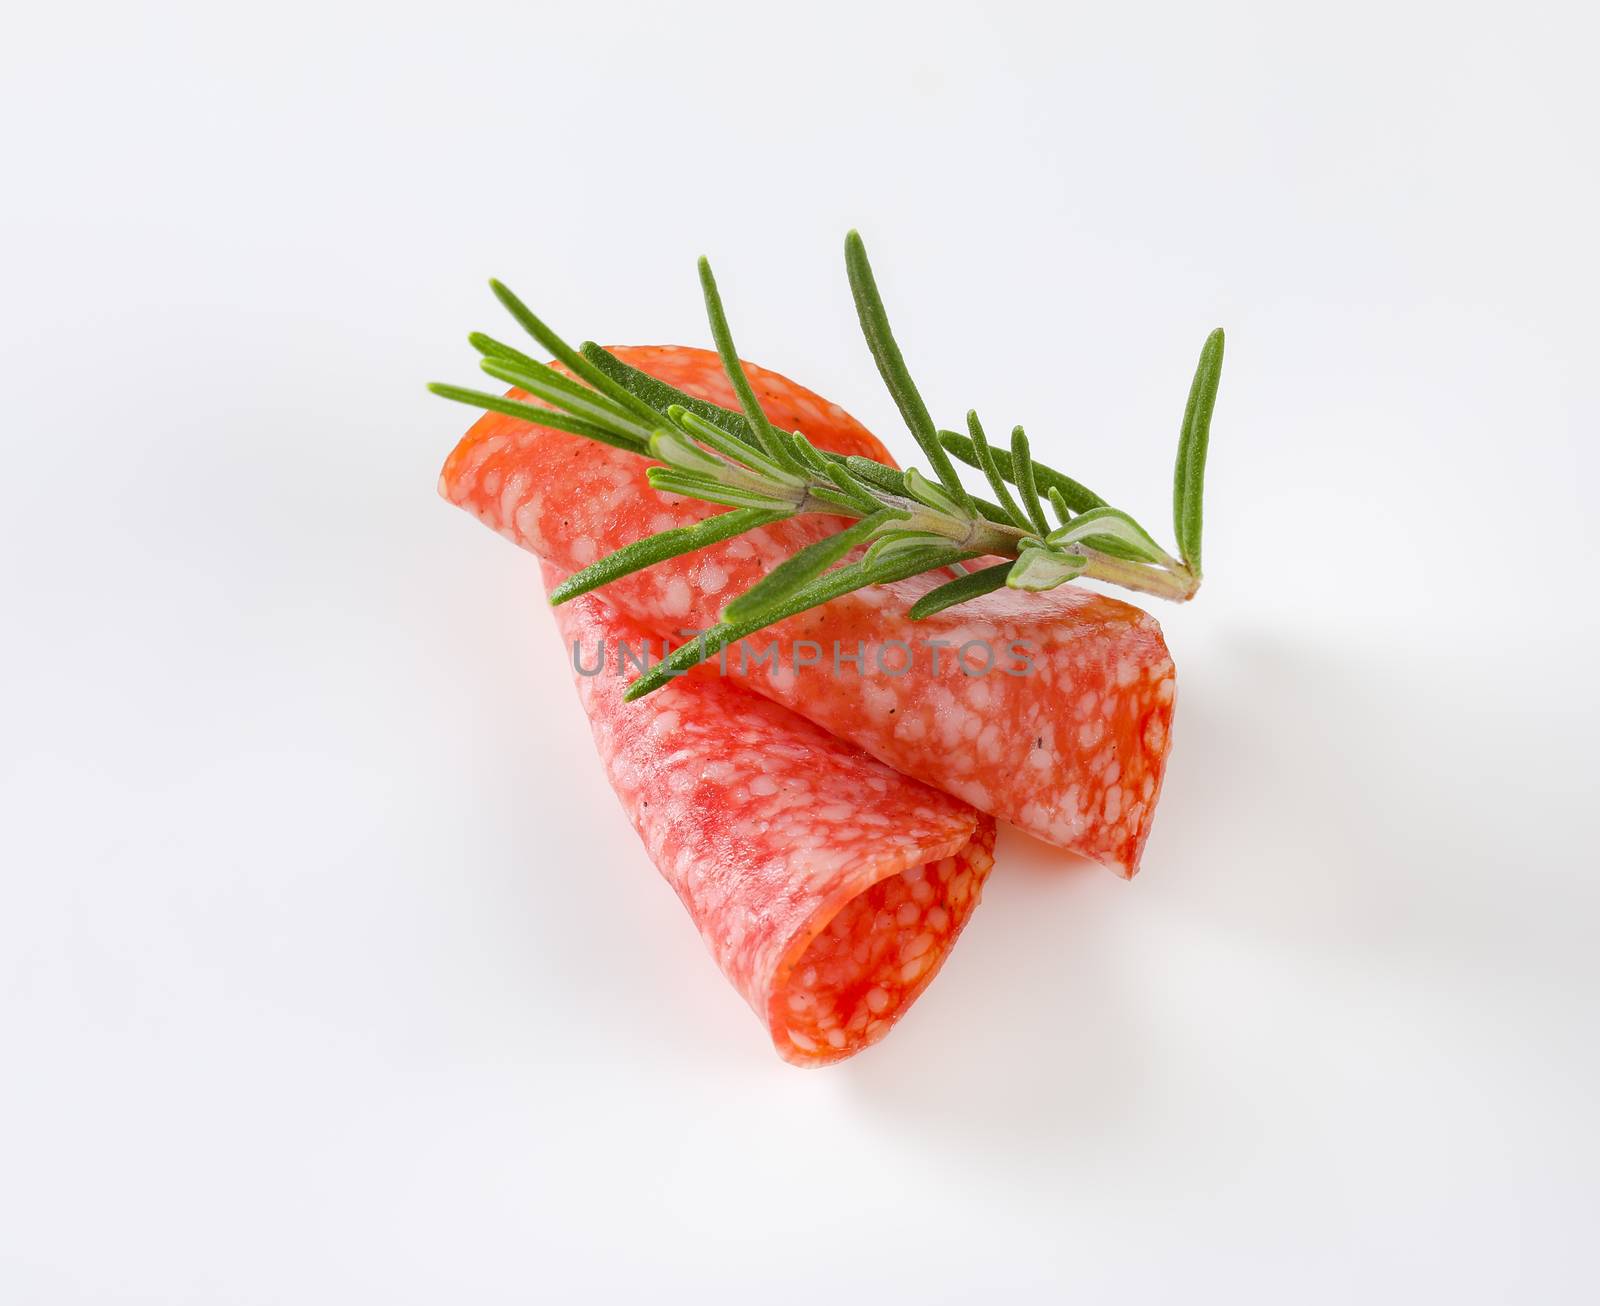 Thin slices of Hungarian salami and fresh rosemary